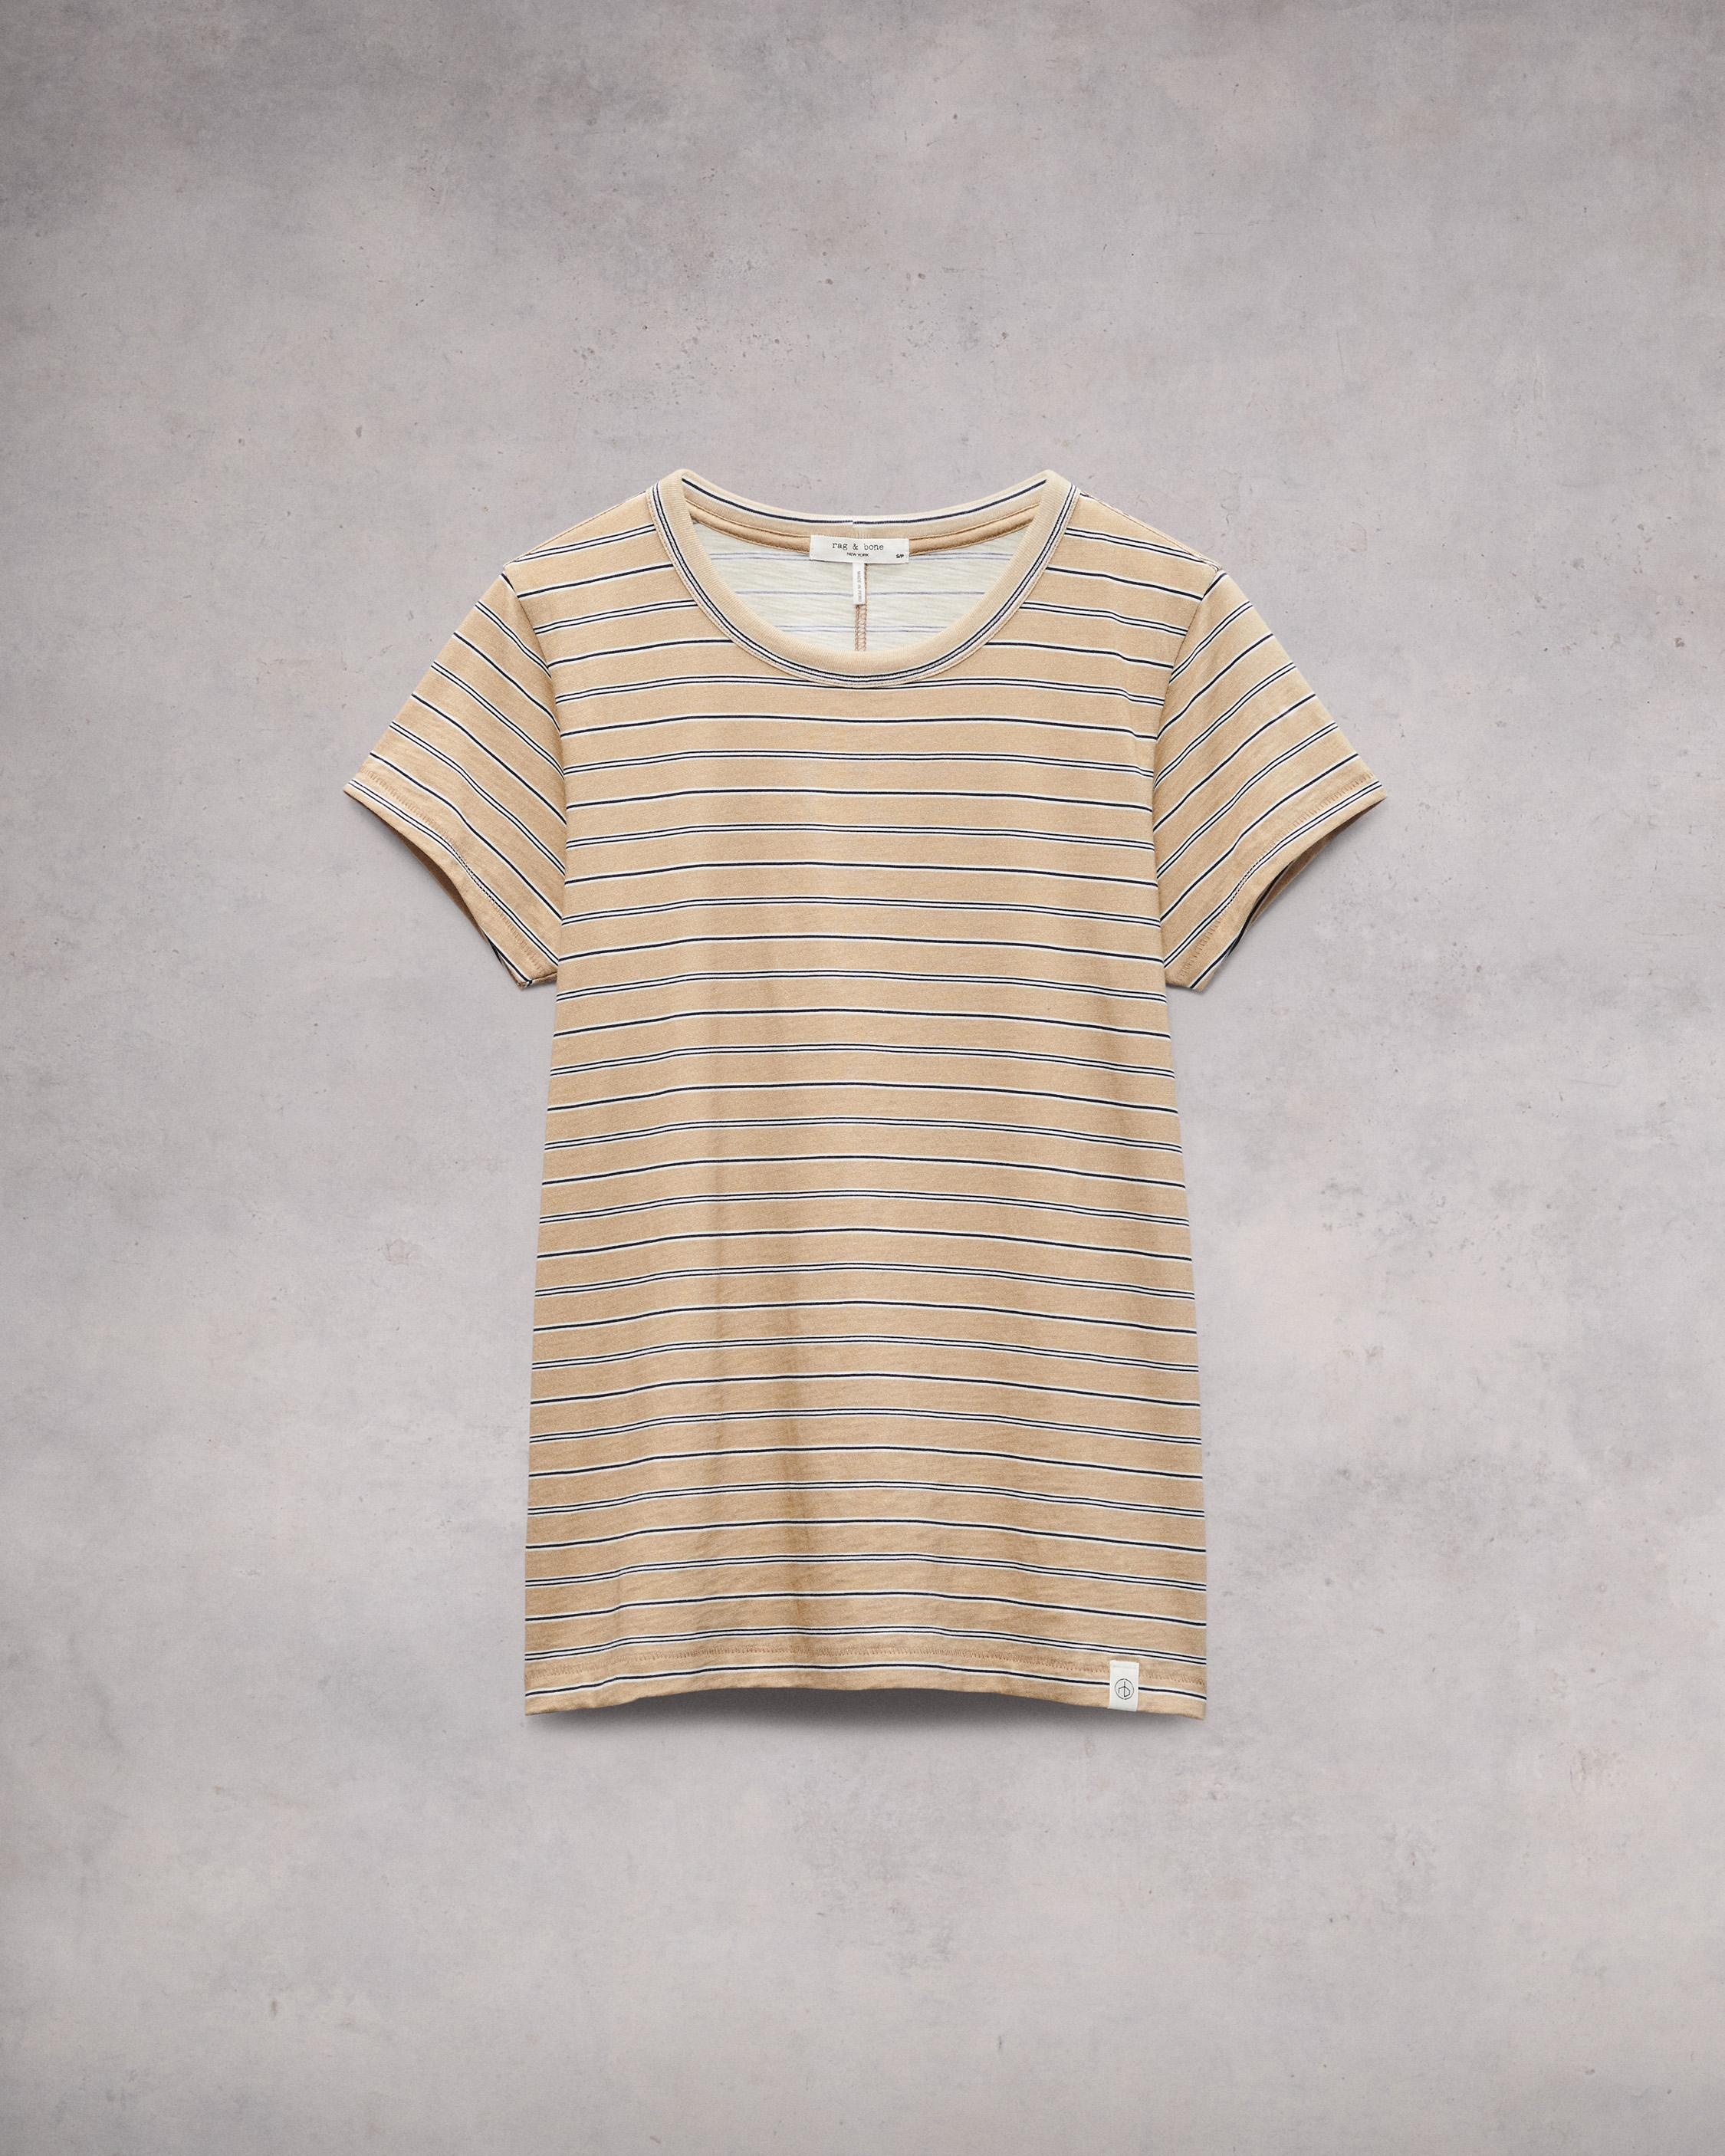 The Slub Stripe Tee
Cotton T-Shirt - 1